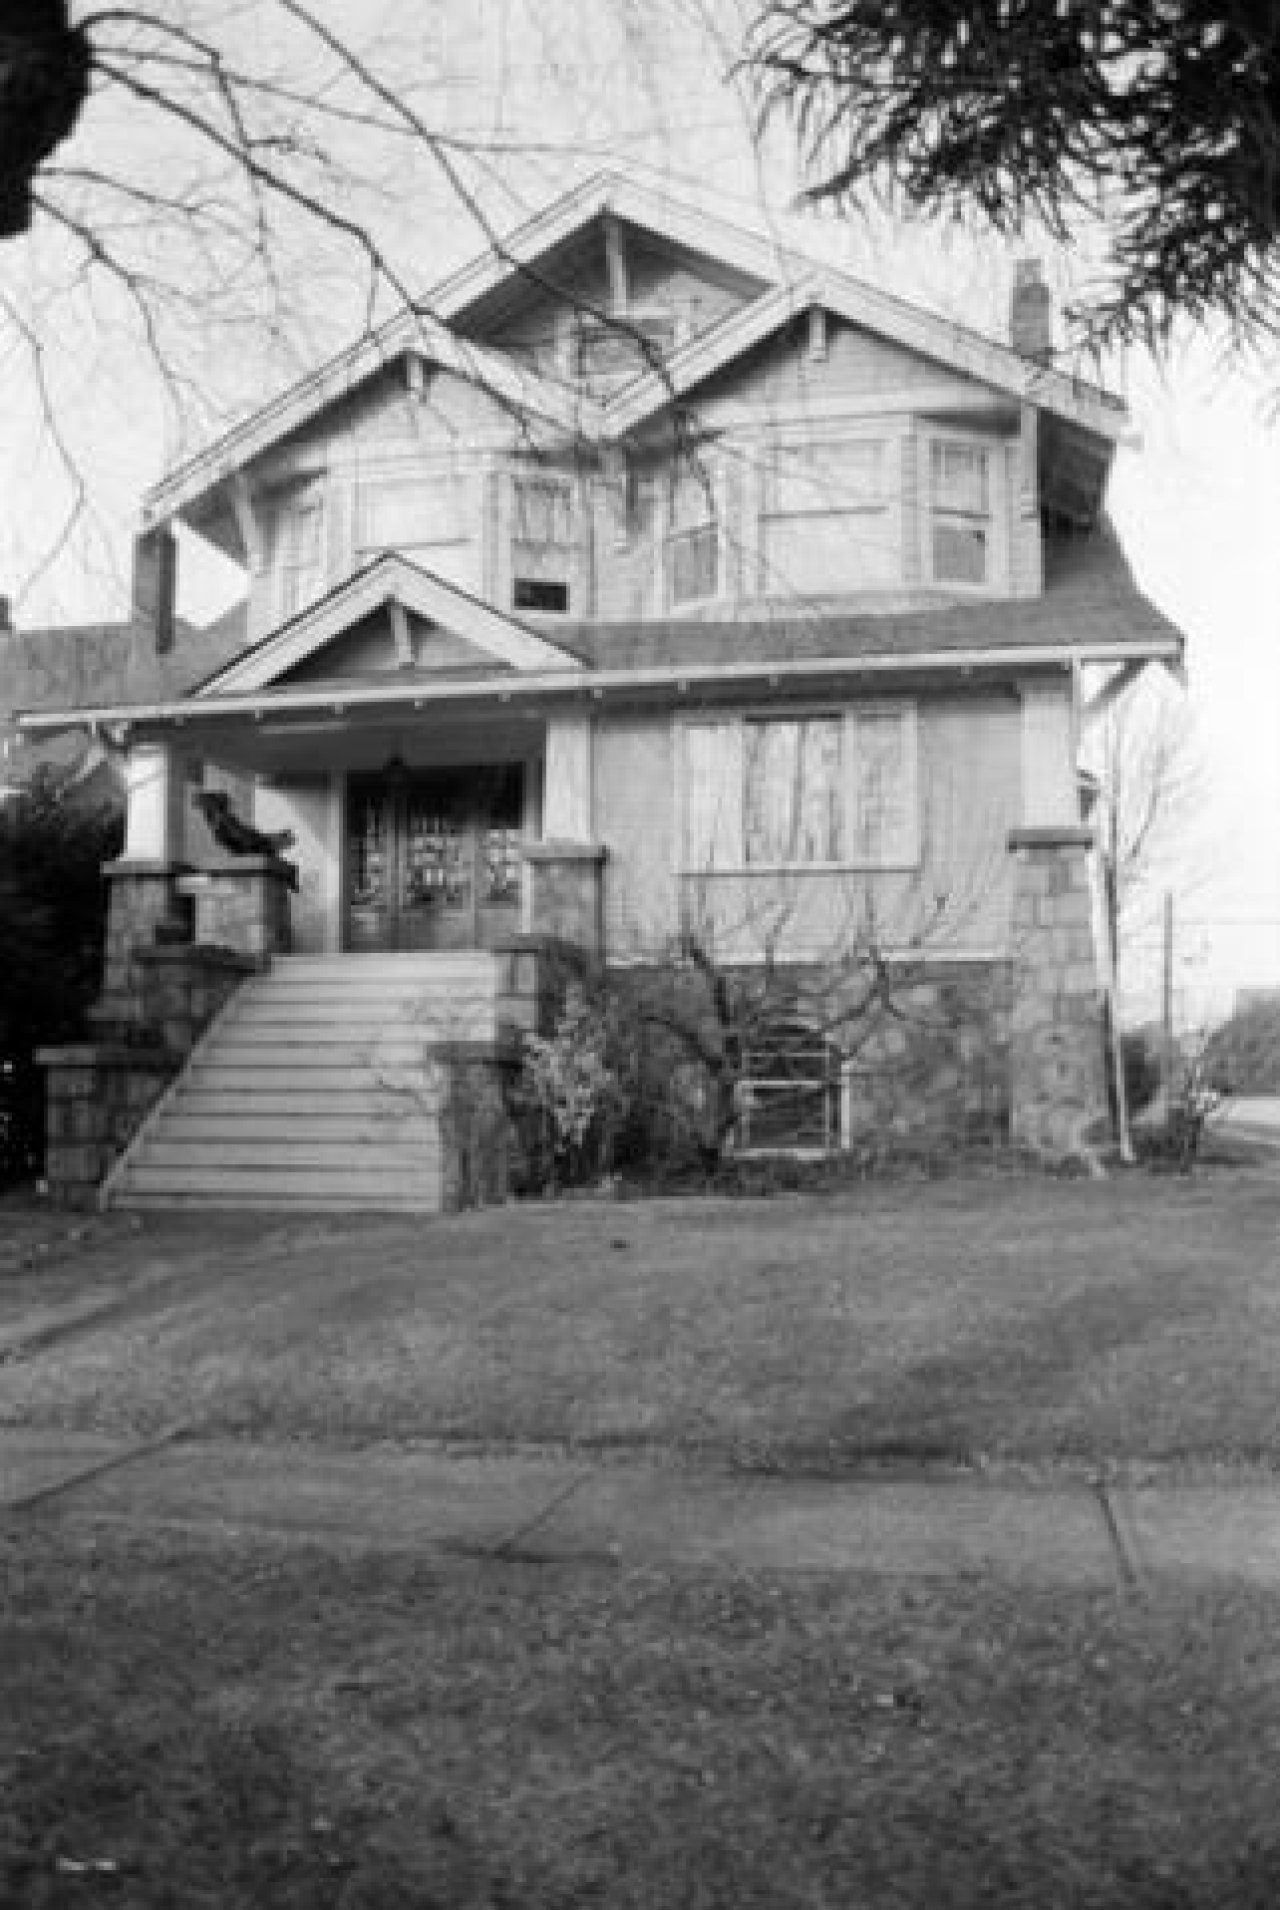 3707 West 2nd Avenue c. 1985
Source: City of Vancouver Archives Item : CVA 790-2064 - 3707 West 2nd Avenue